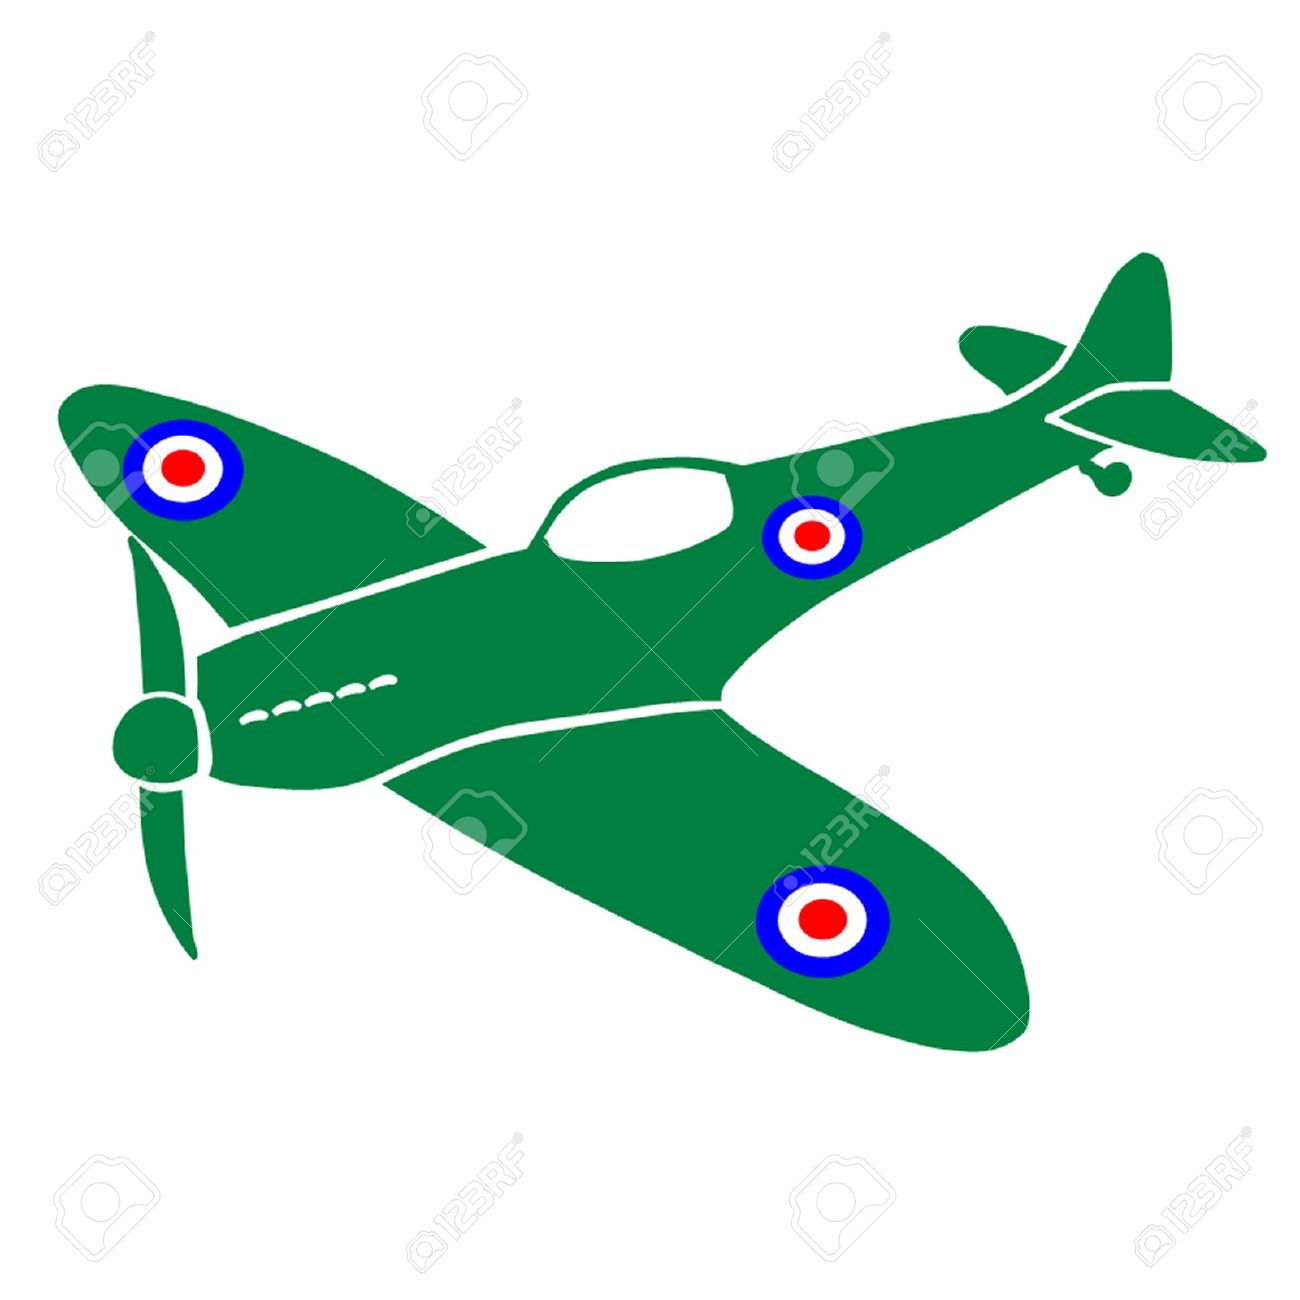 Spitfire plane clipart.